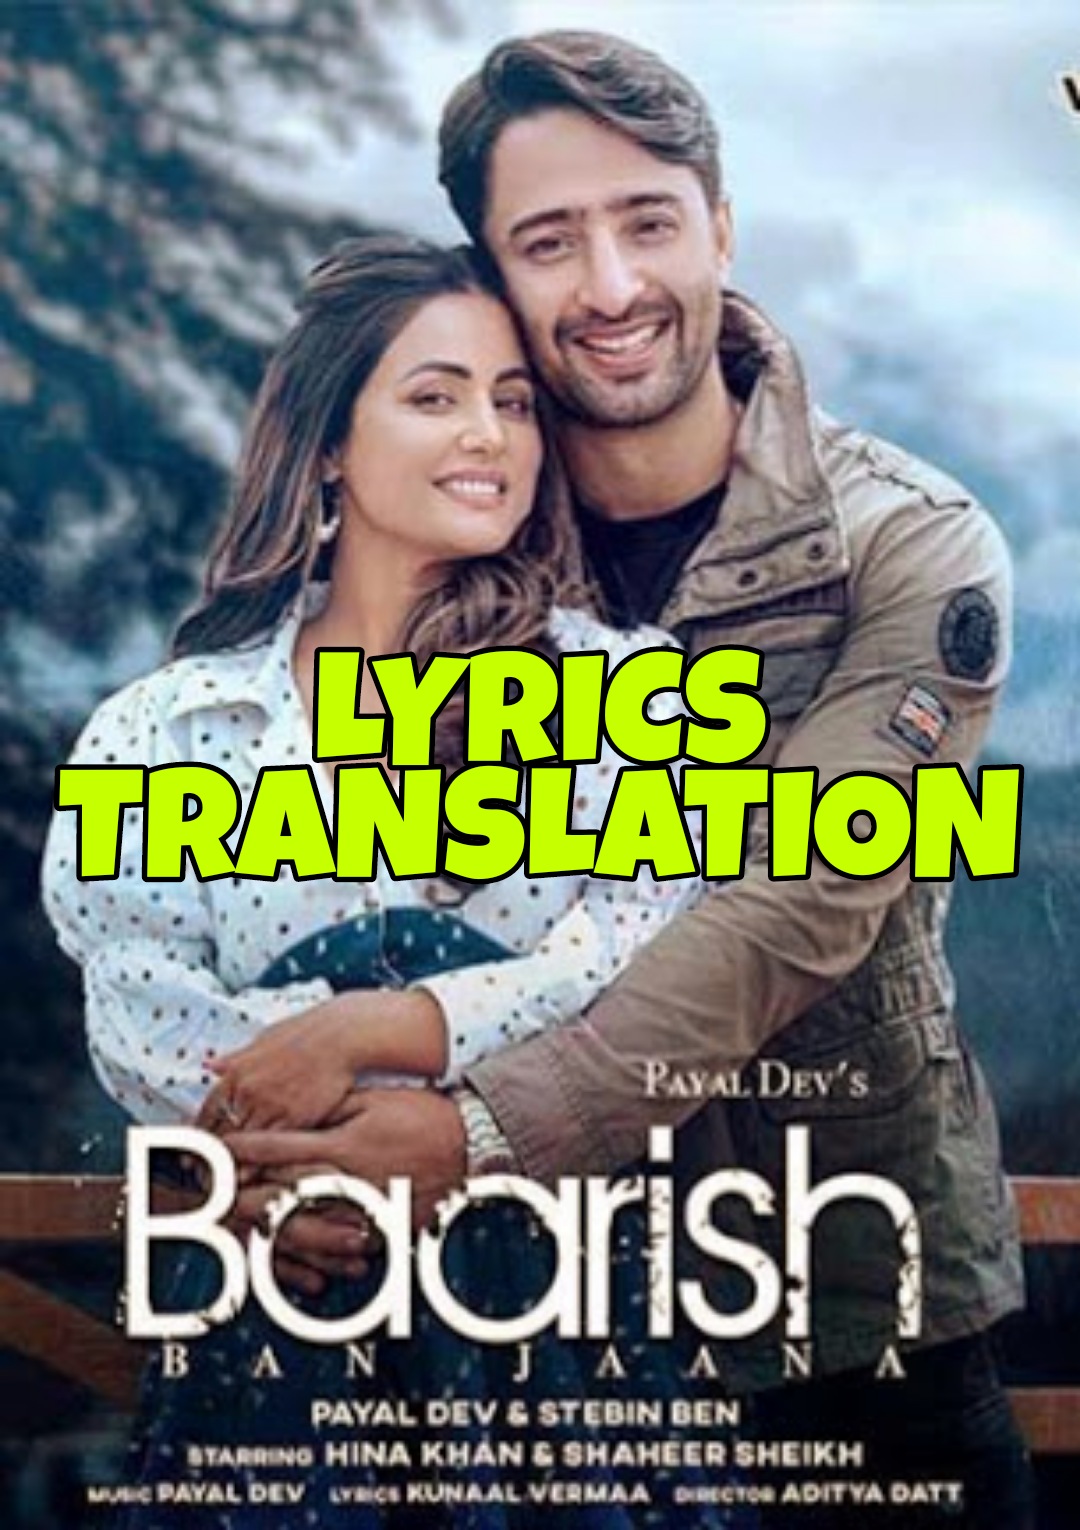 Baarish Ban Jaana Lyrics in English | With Translation | – Payal Dev x